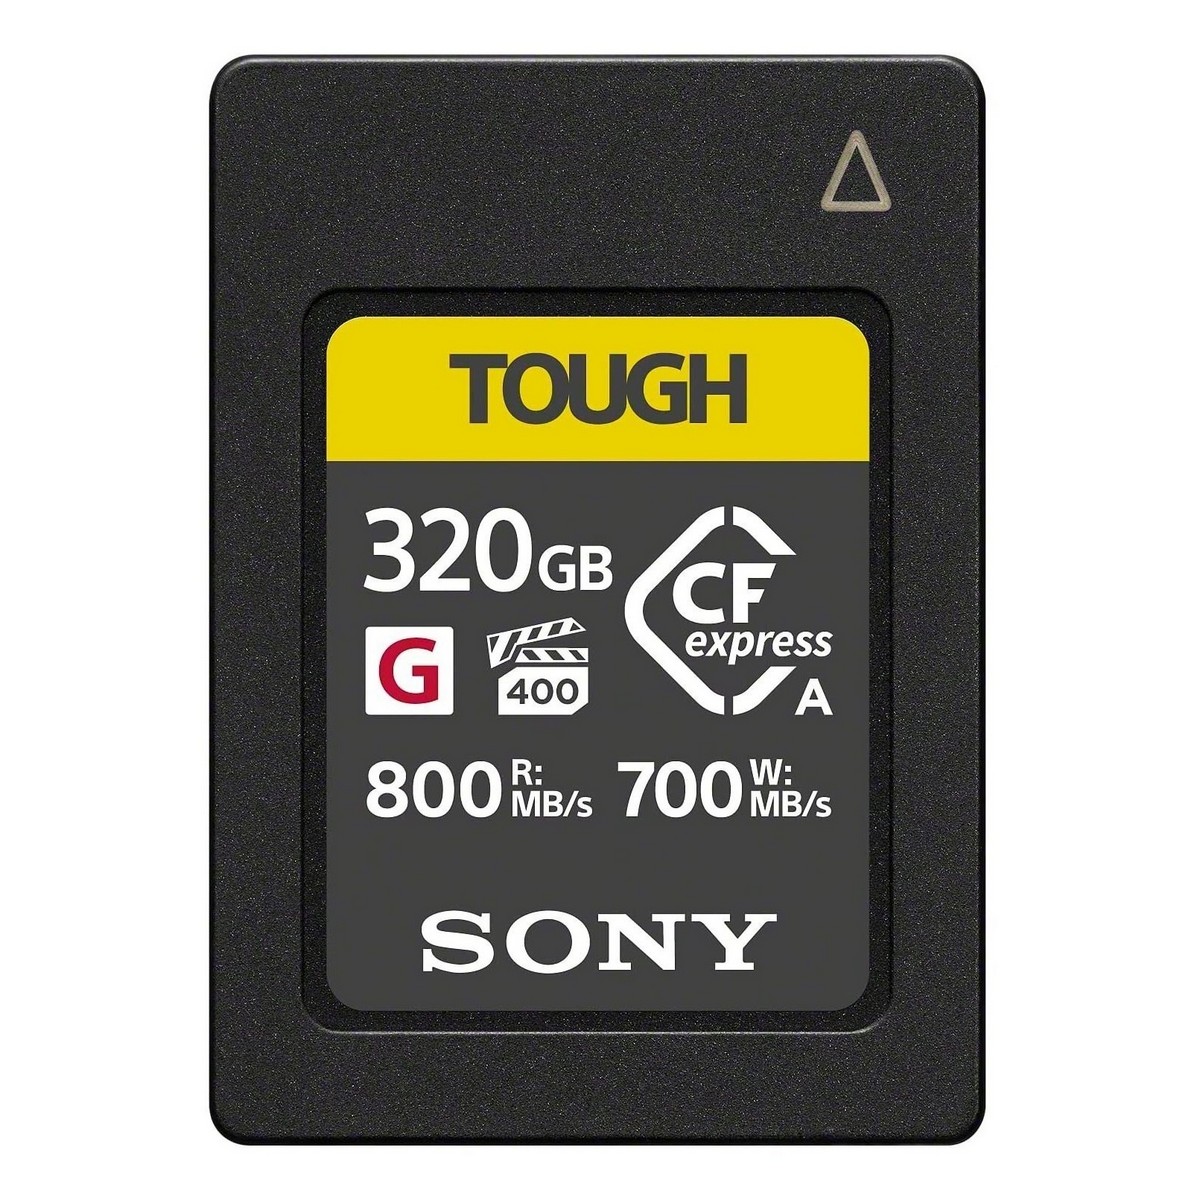 Карта памяти Sony CFexpress Type A 320GB Tough